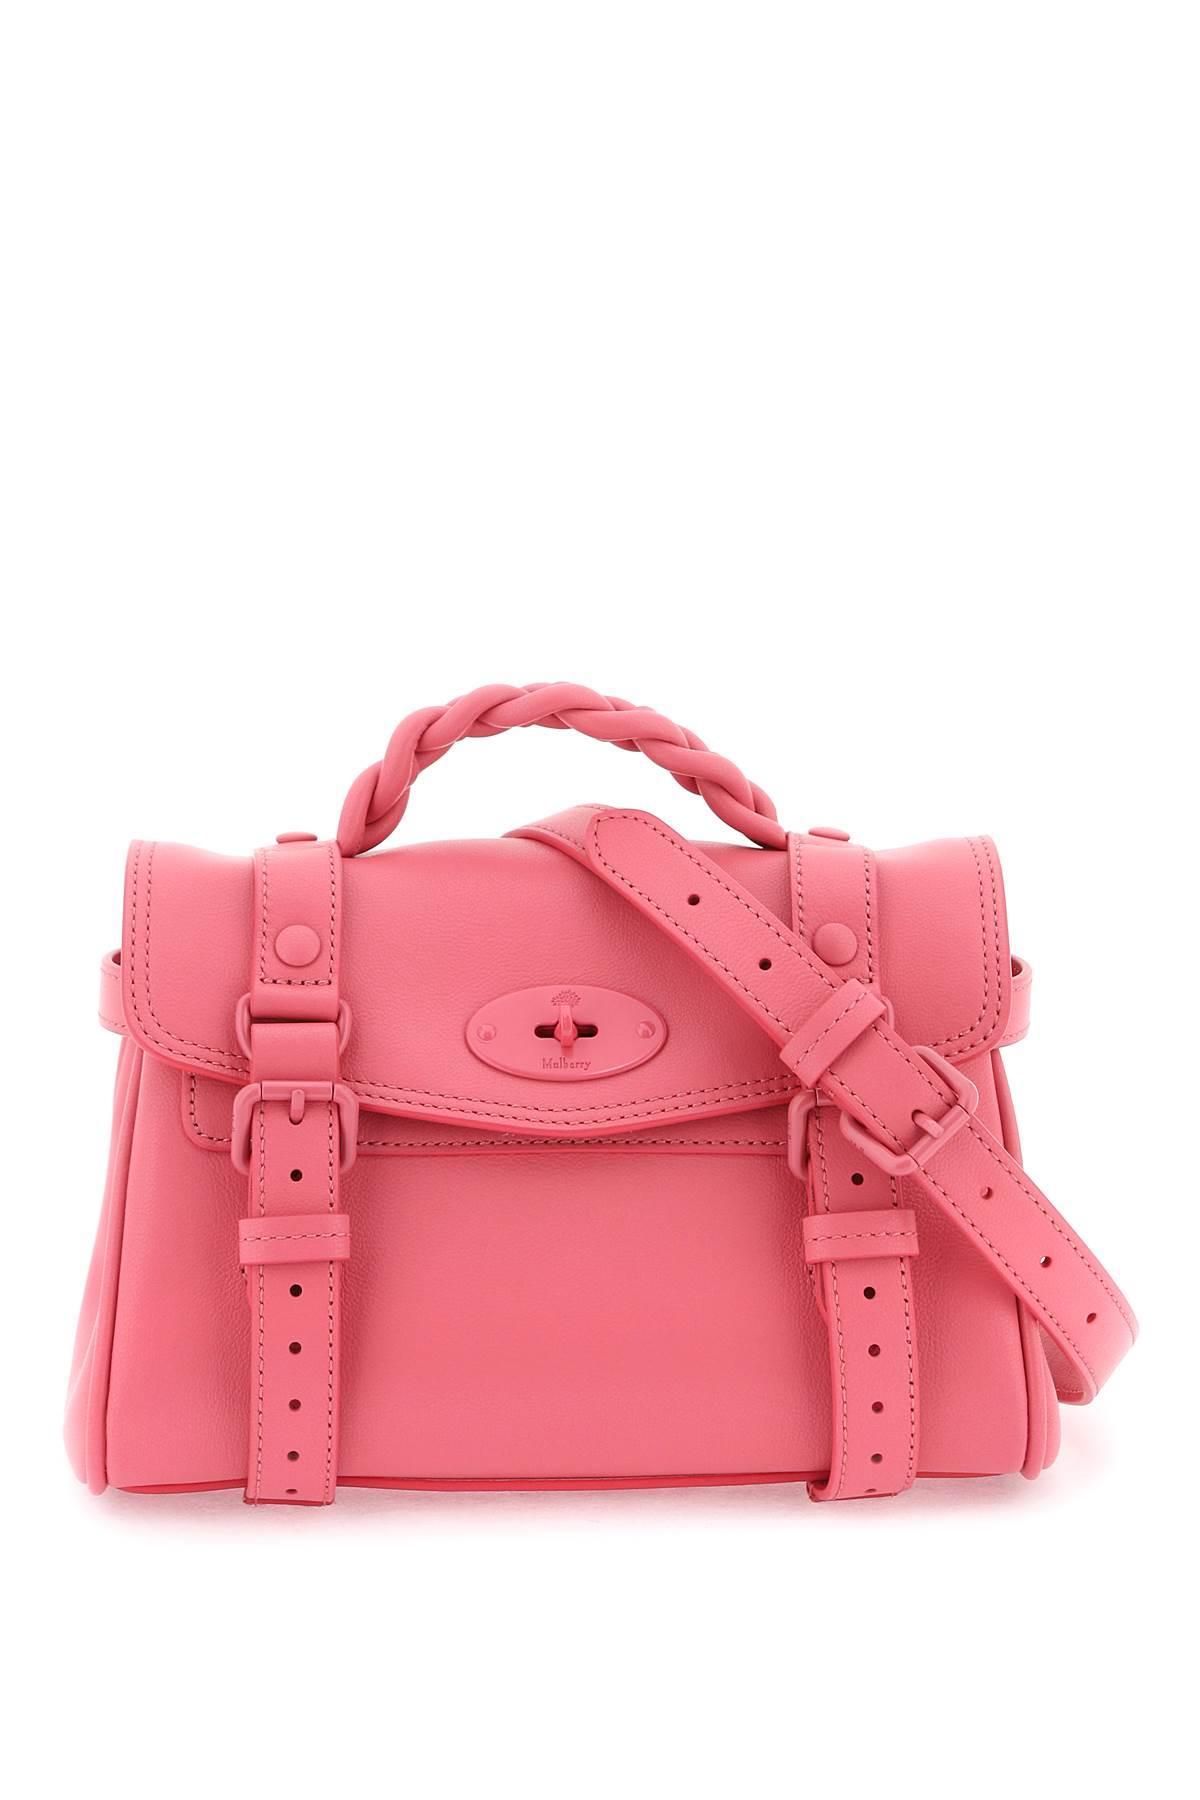 Mulberry 'alexa' Mini Bag in Pink | Lyst